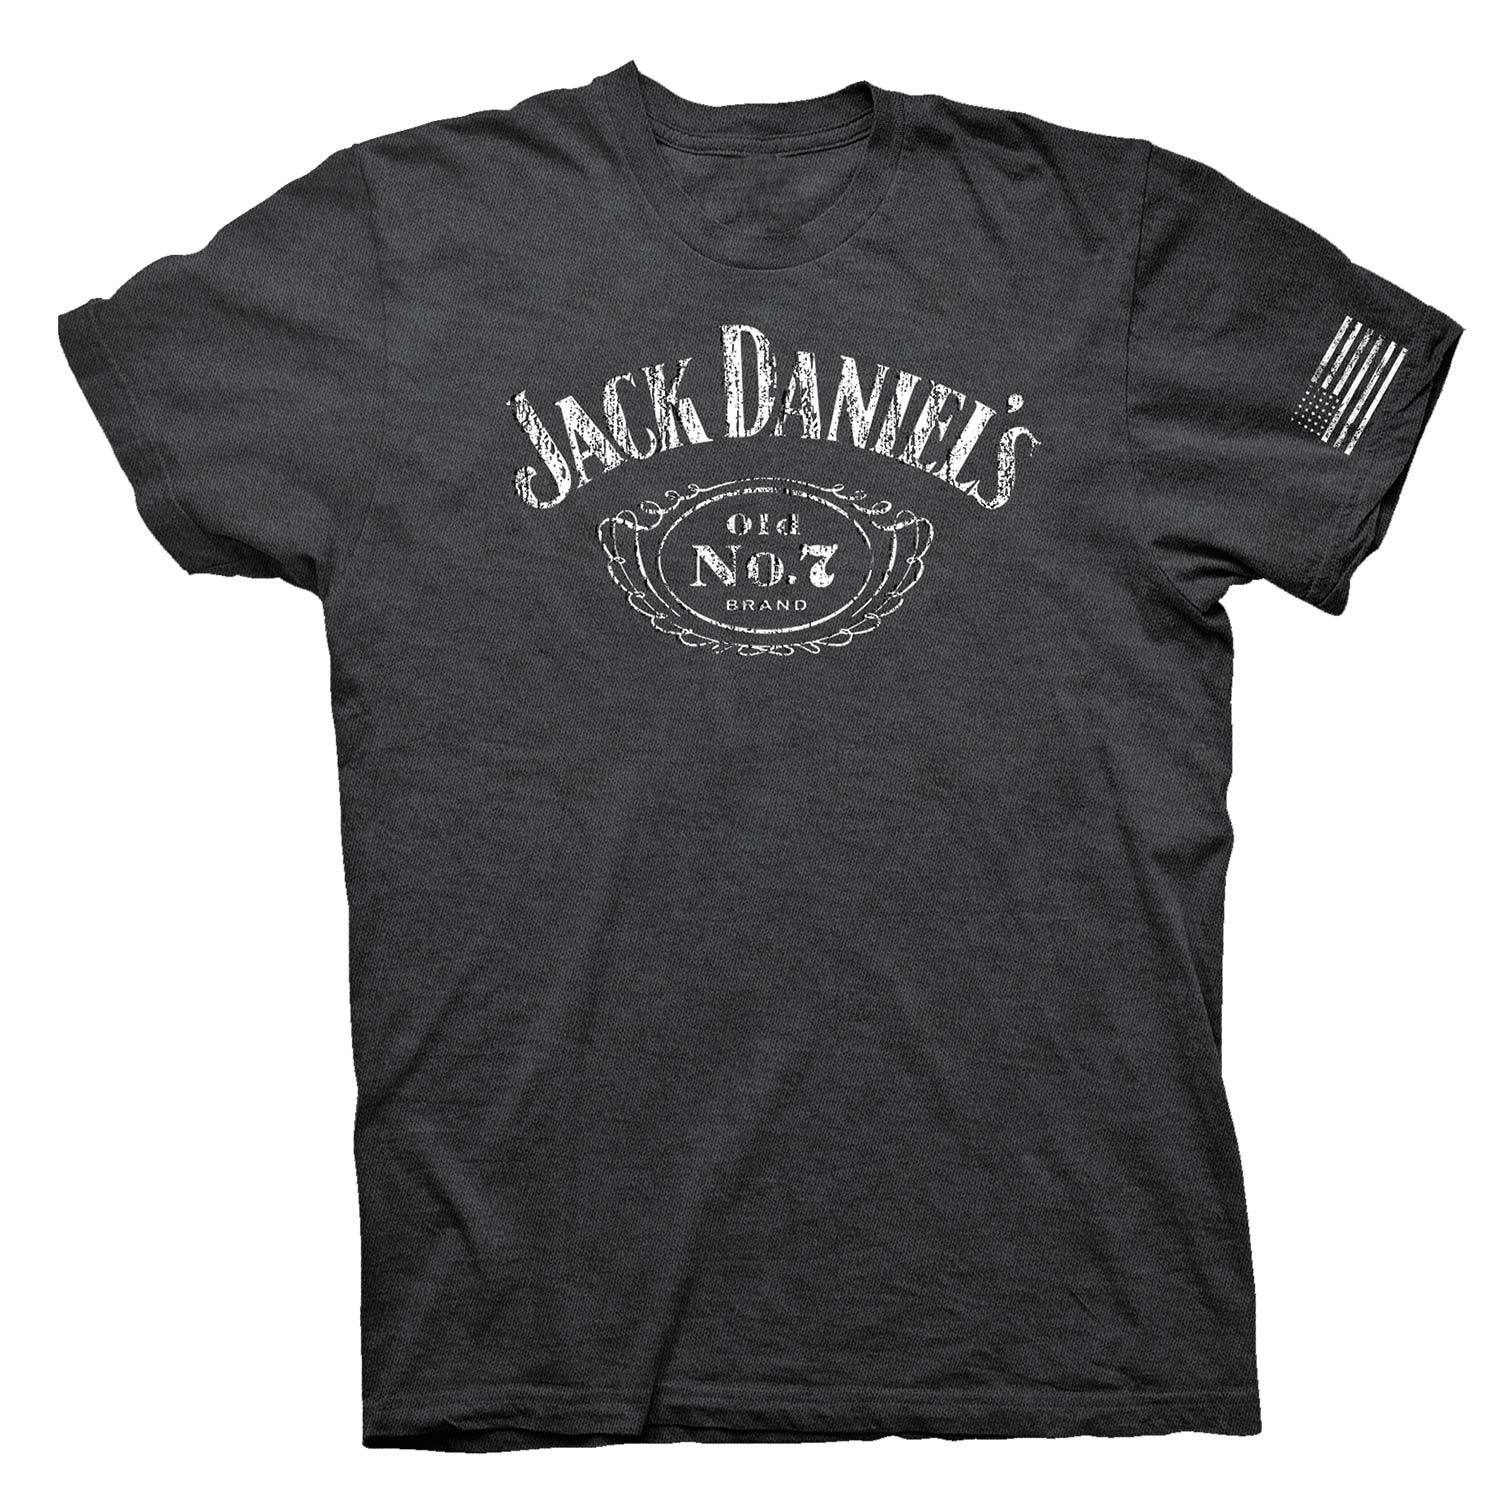 Jack Daniels Cartouche Heather Grey Tee Shirt